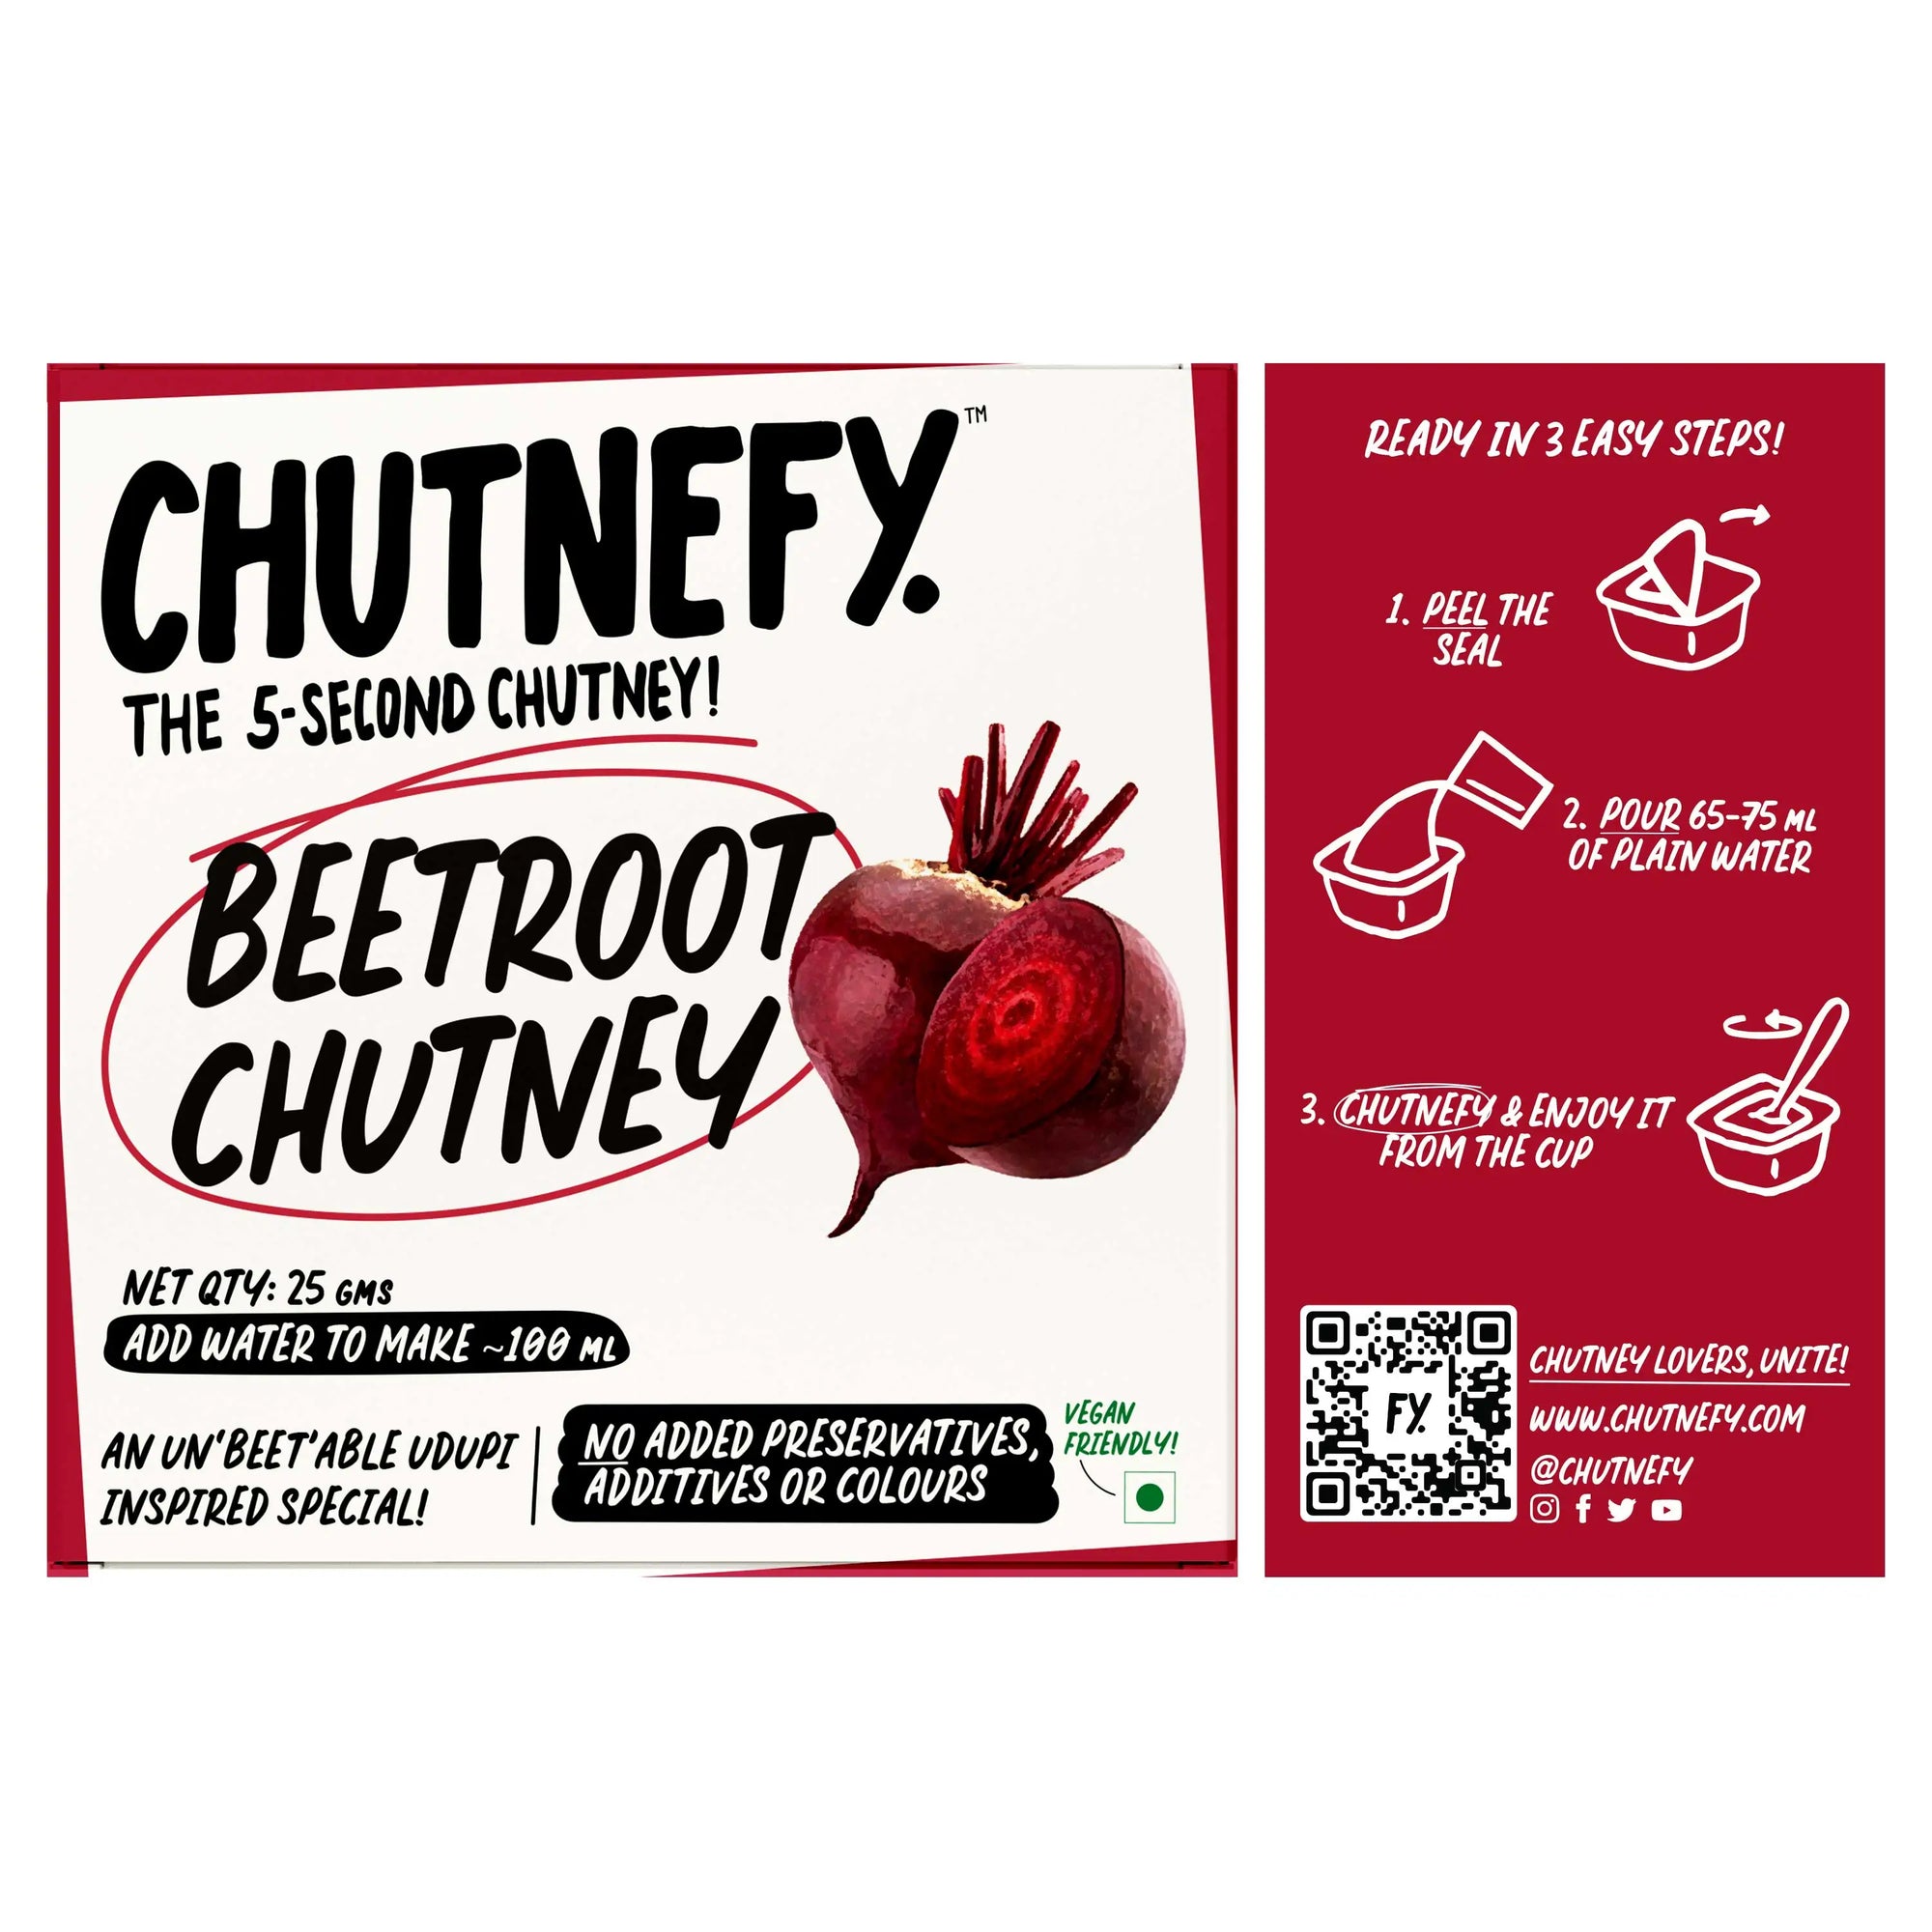 Beetroot Chutney | Udupi Inspired Special | Medium Spicy